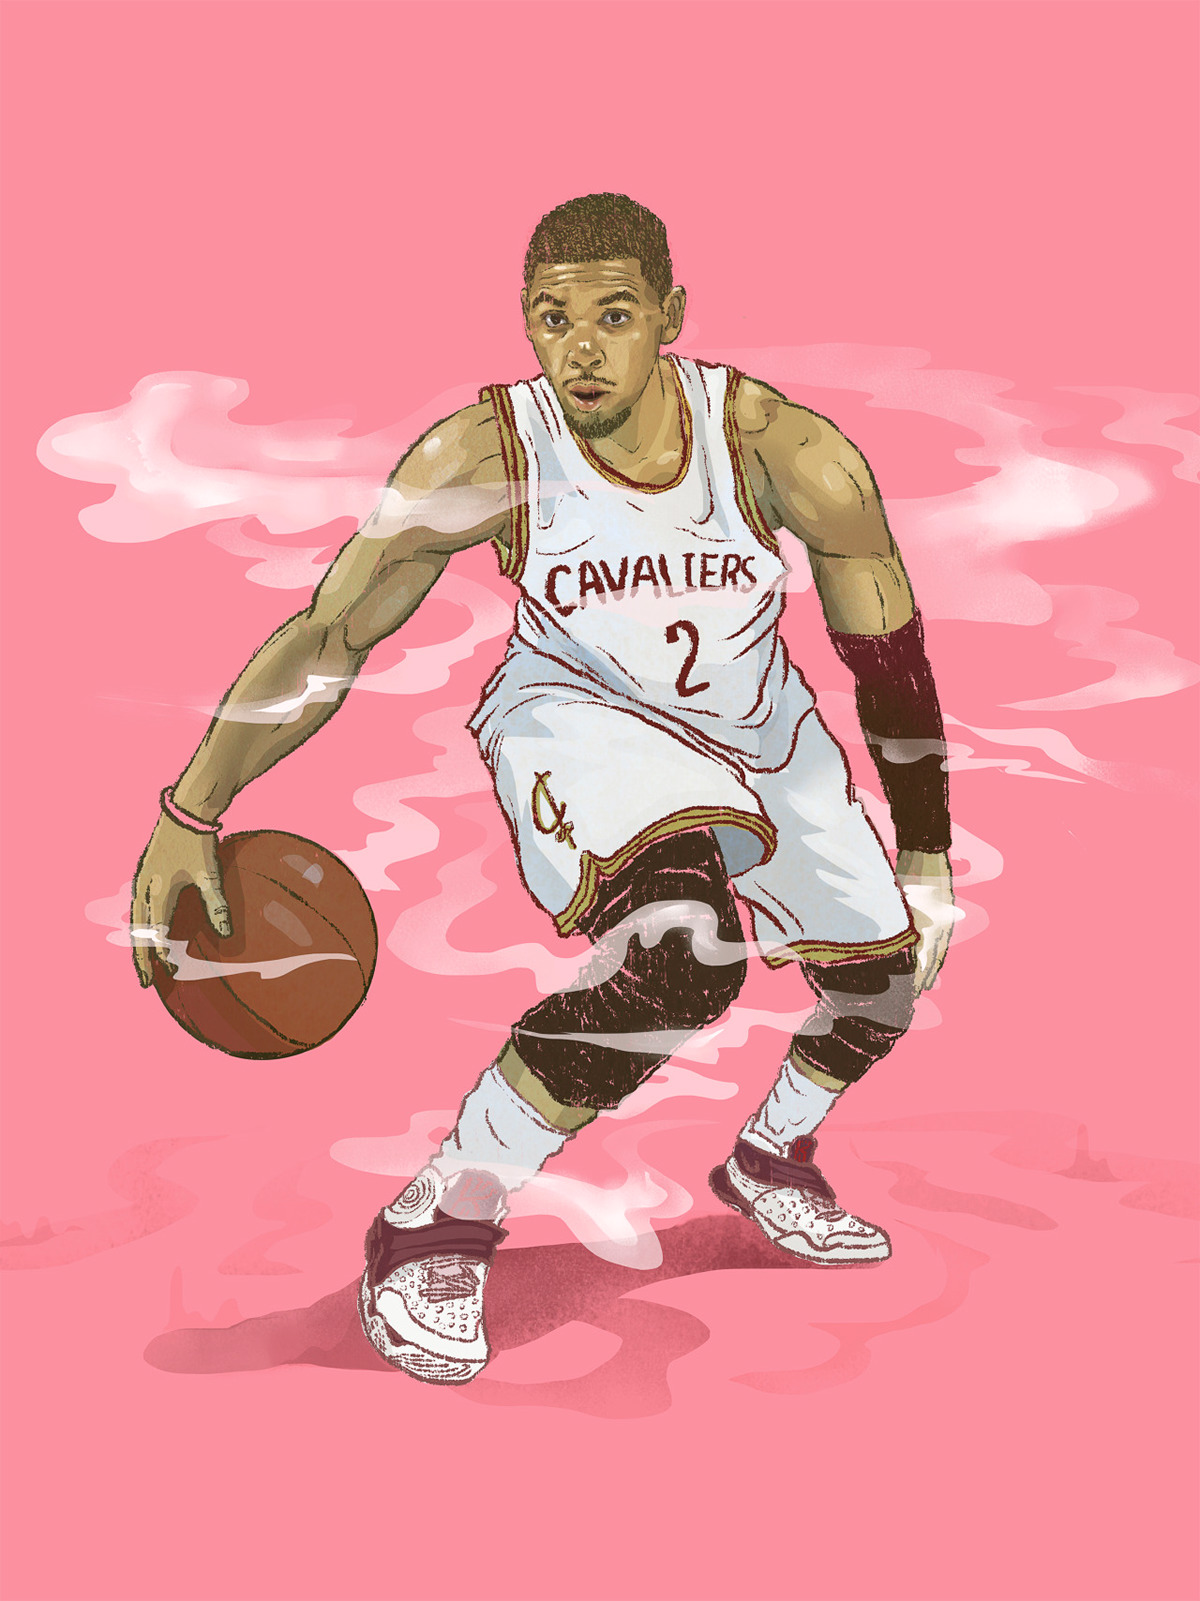 ESPN sport Russell Westbrook jimmy butler kyrie irving NBA basketball advertisement hoop sneakers yuminghuang illustration